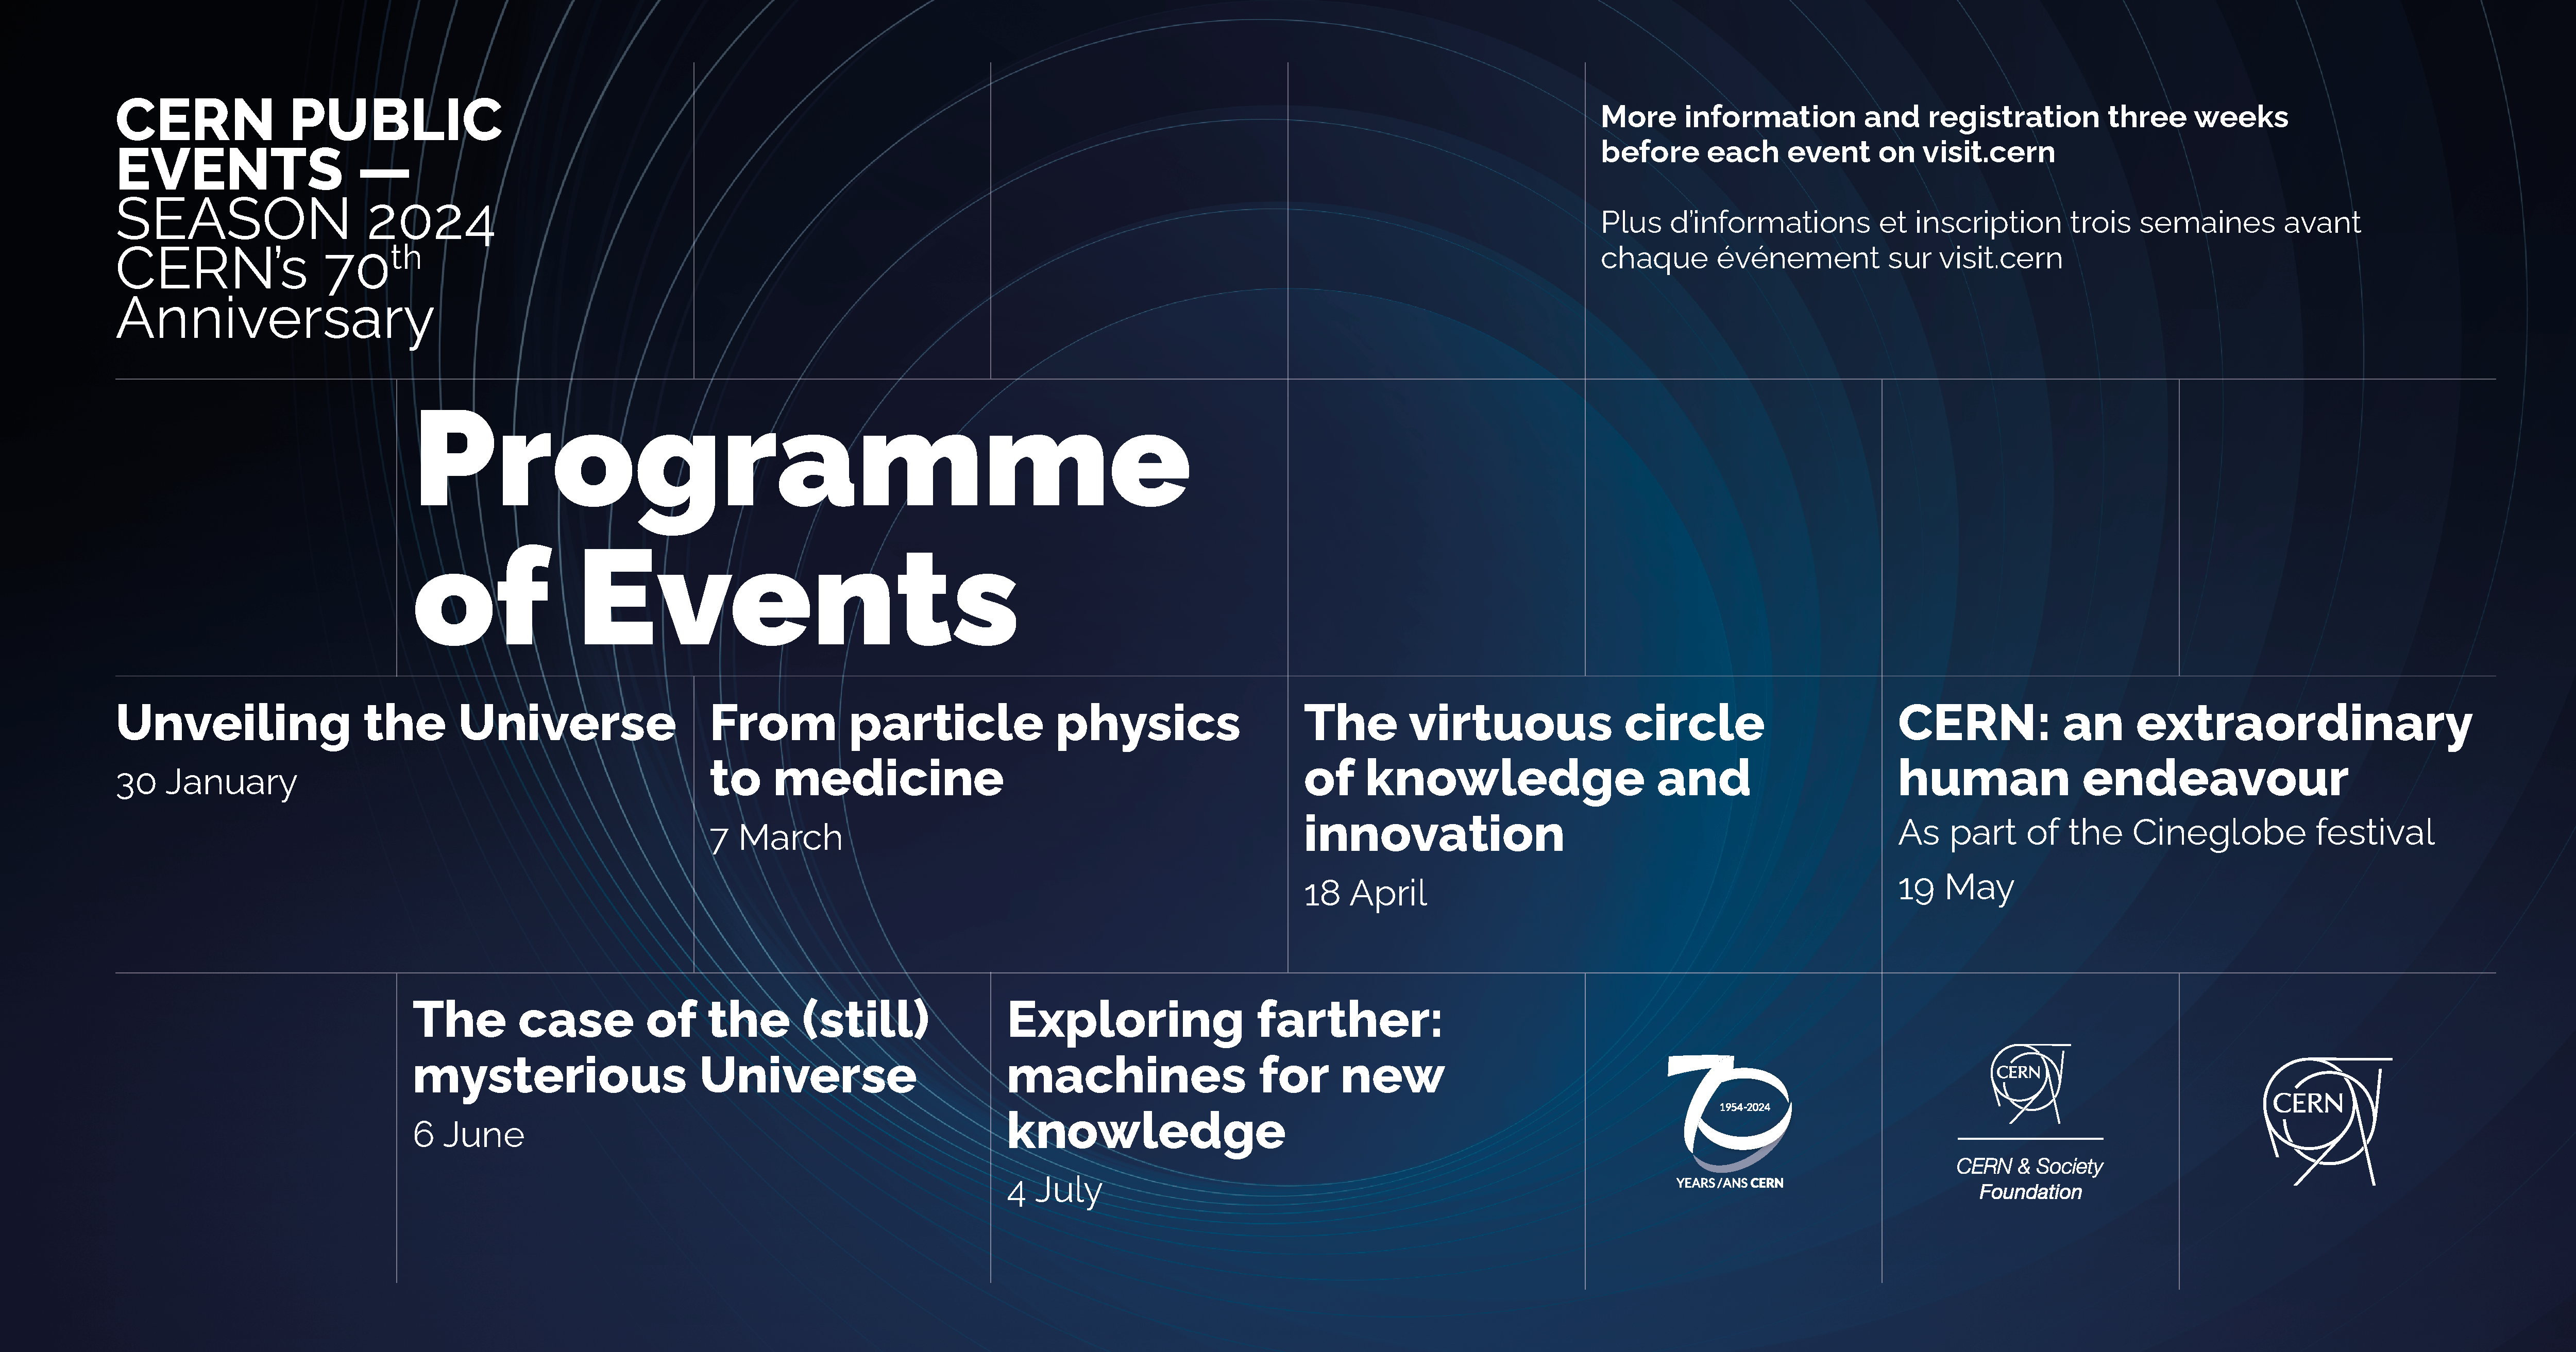 CERN70 public events